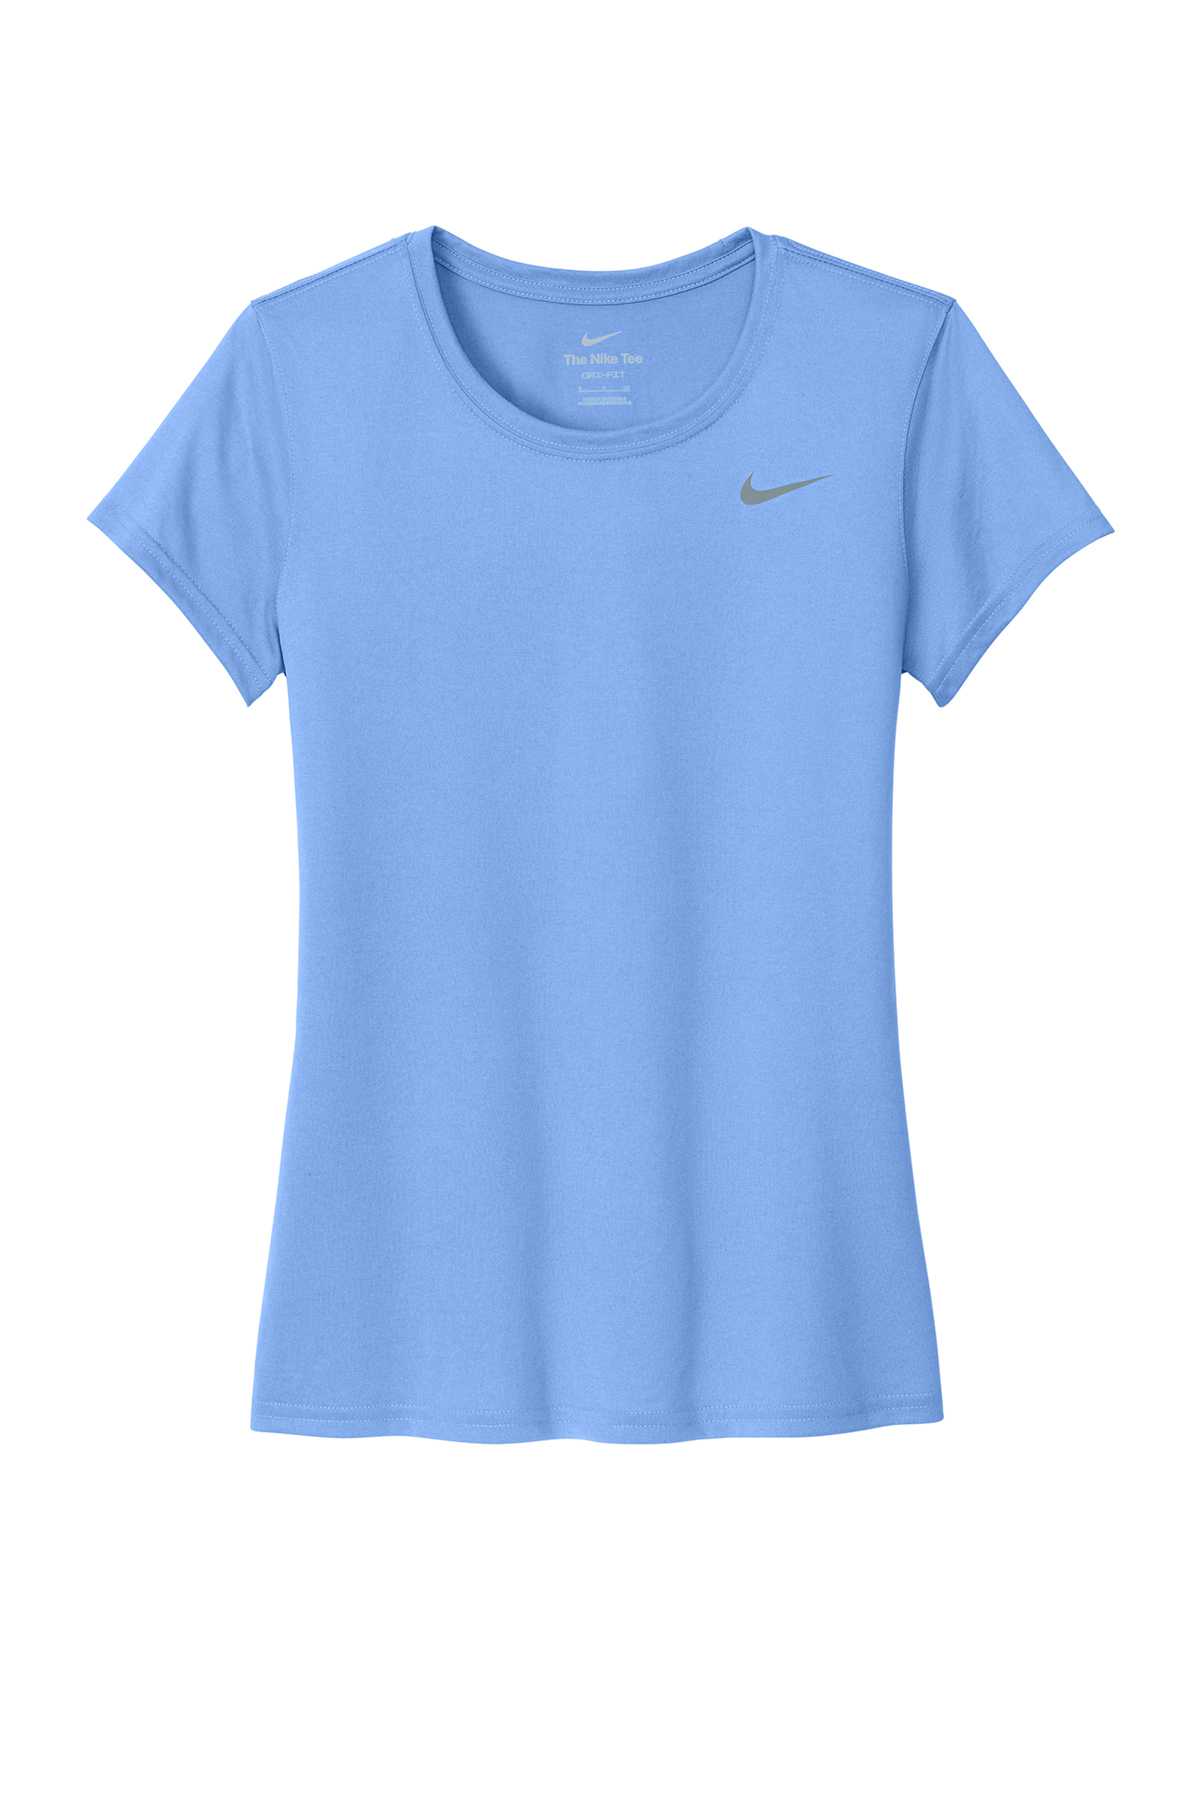 Nike Ladies Team rLegend Tee | Product | Company Casuals